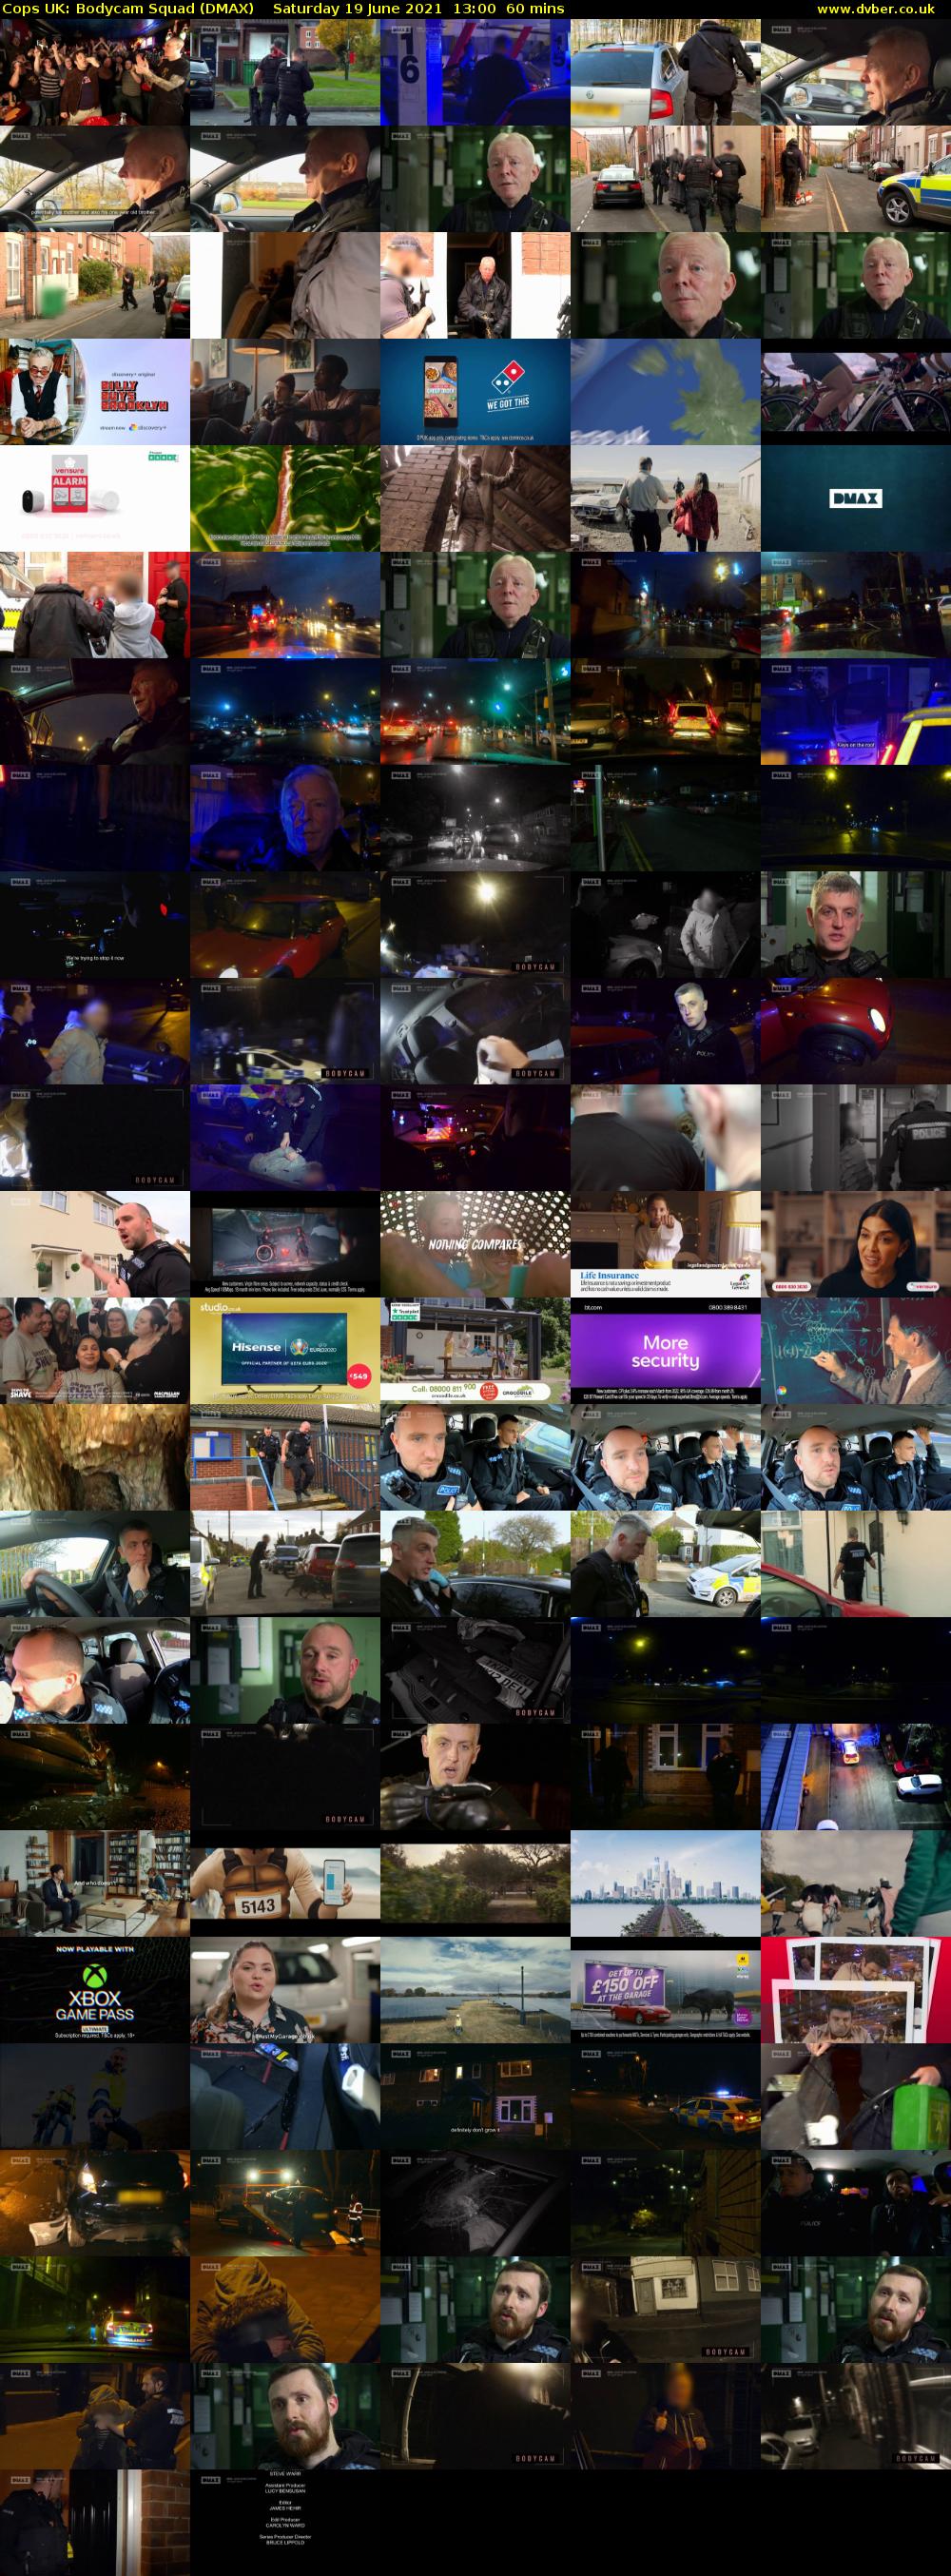 Cops UK: Bodycam Squad (DMAX) Saturday 19 June 2021 13:00 - 14:00